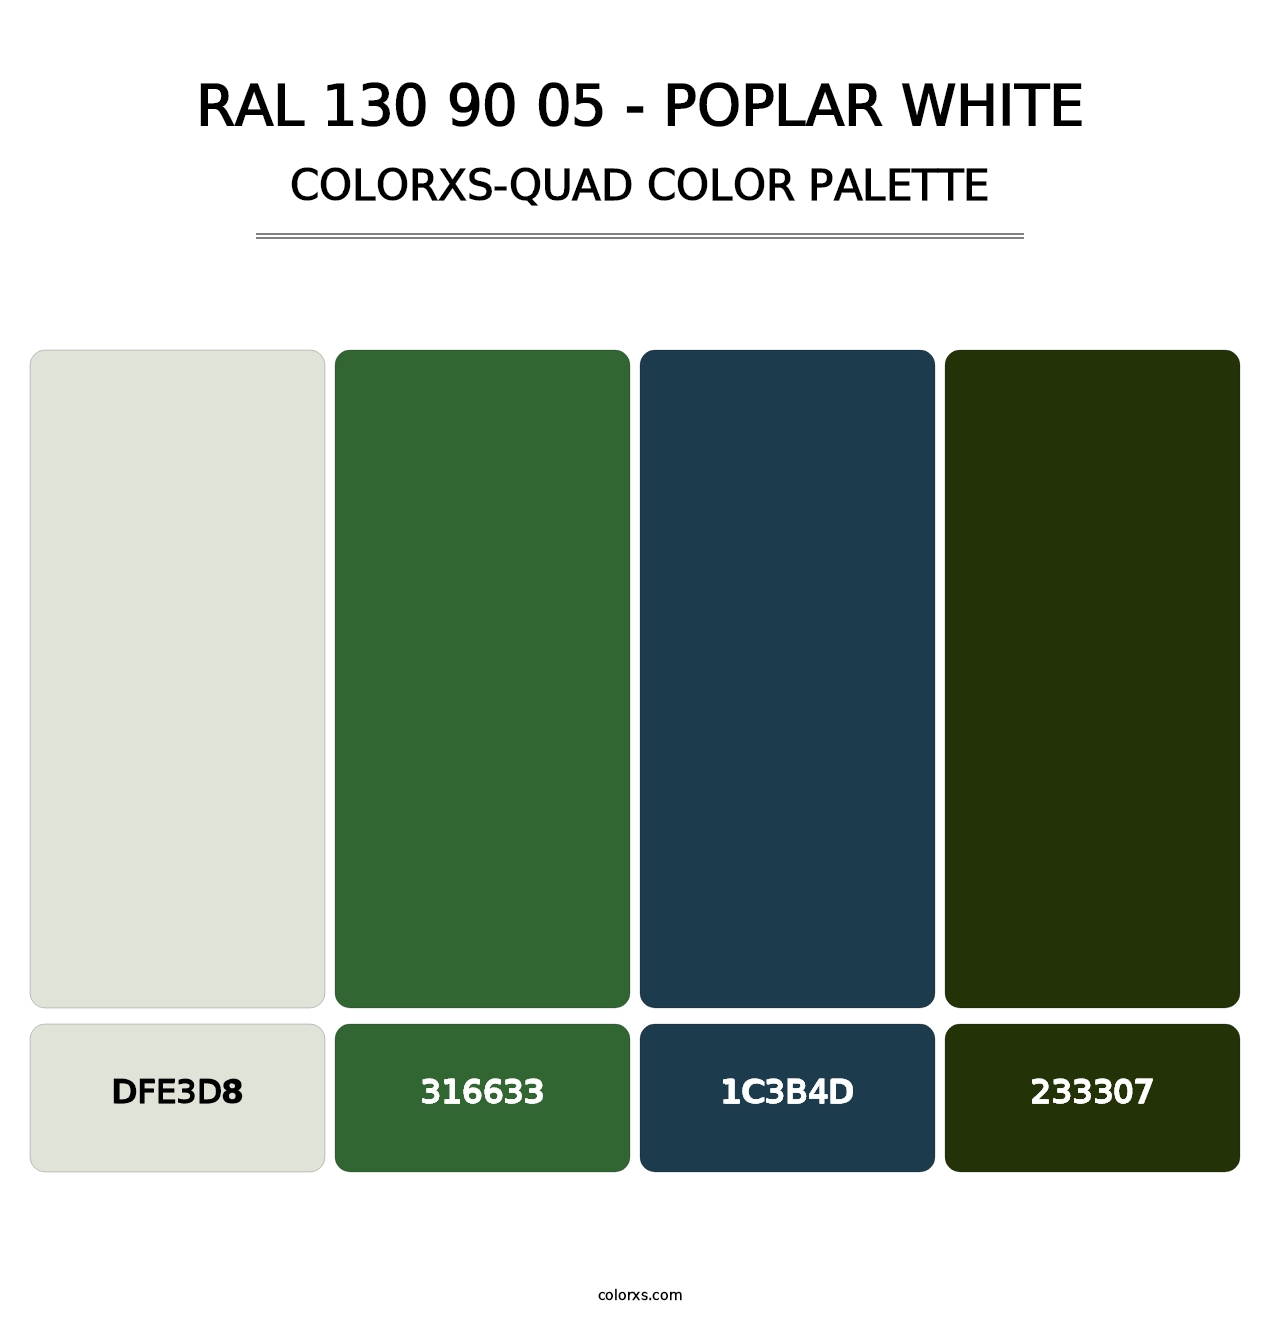 RAL 130 90 05 - Poplar White - Colorxs Quad Palette